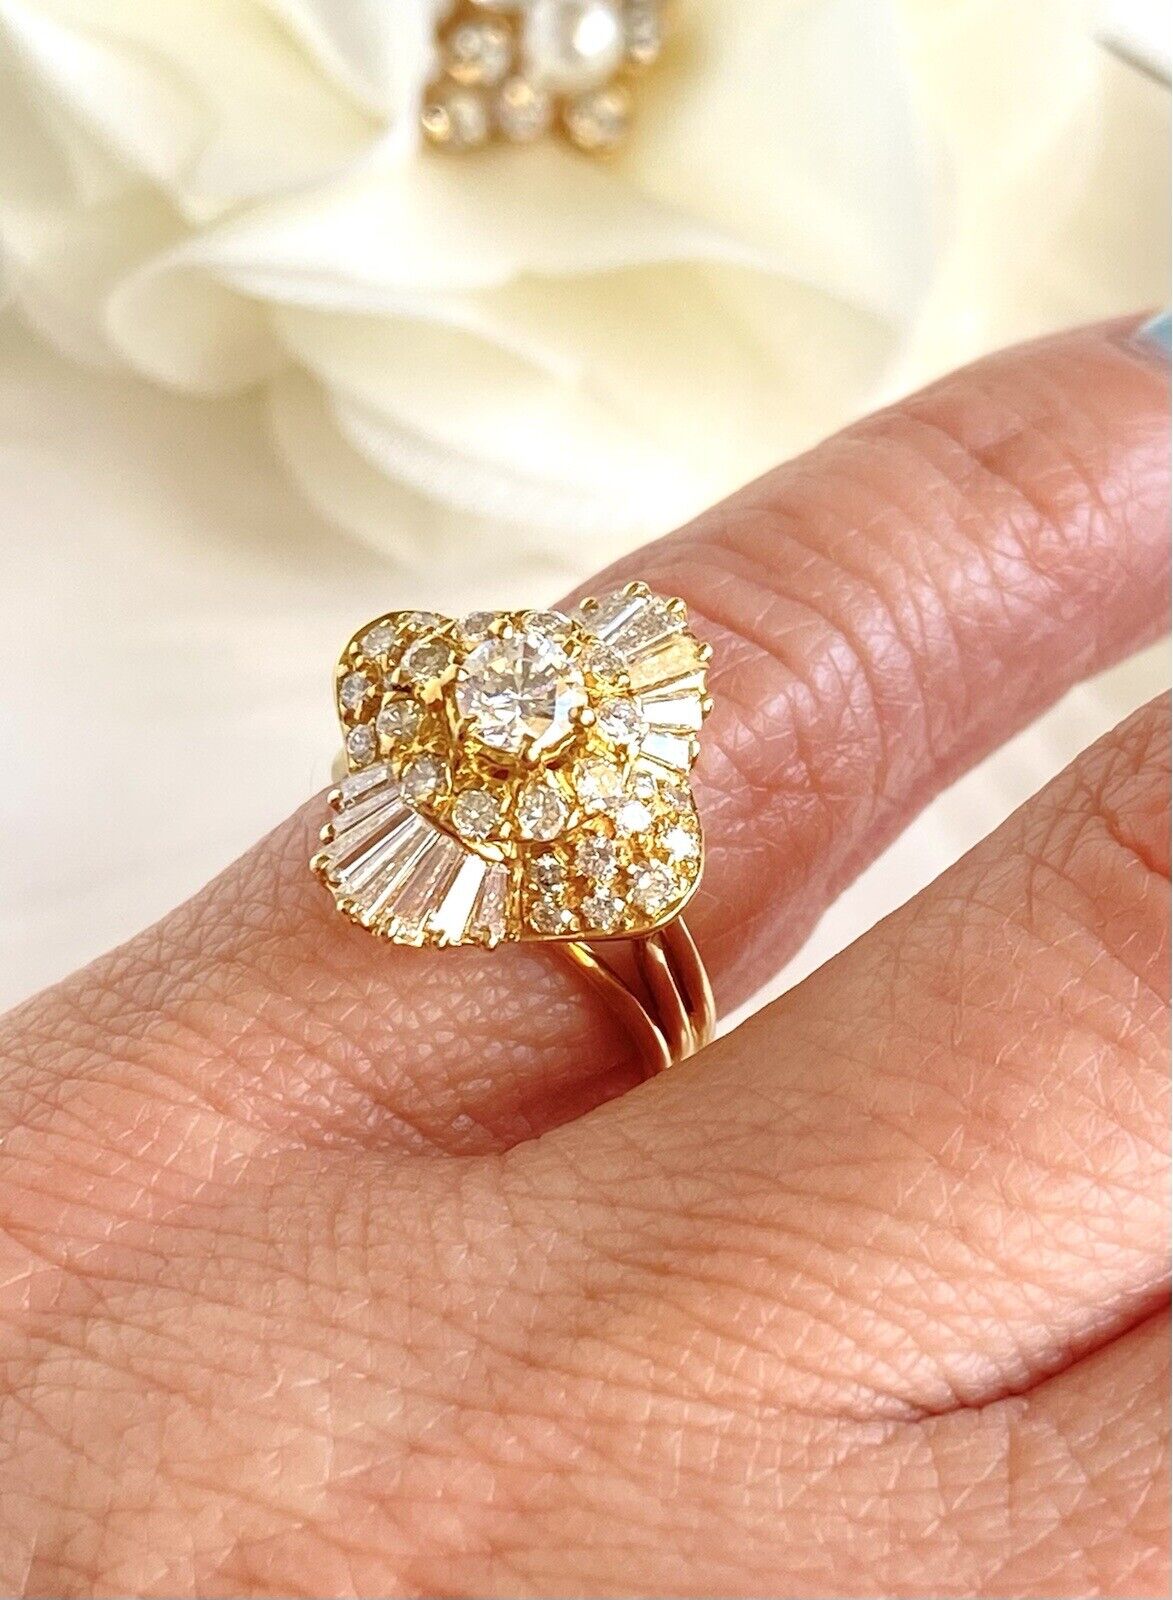 Gorgeous Vintage 18kt Gold & Genuine Diamonds Ballerina Ring, Size 5.25